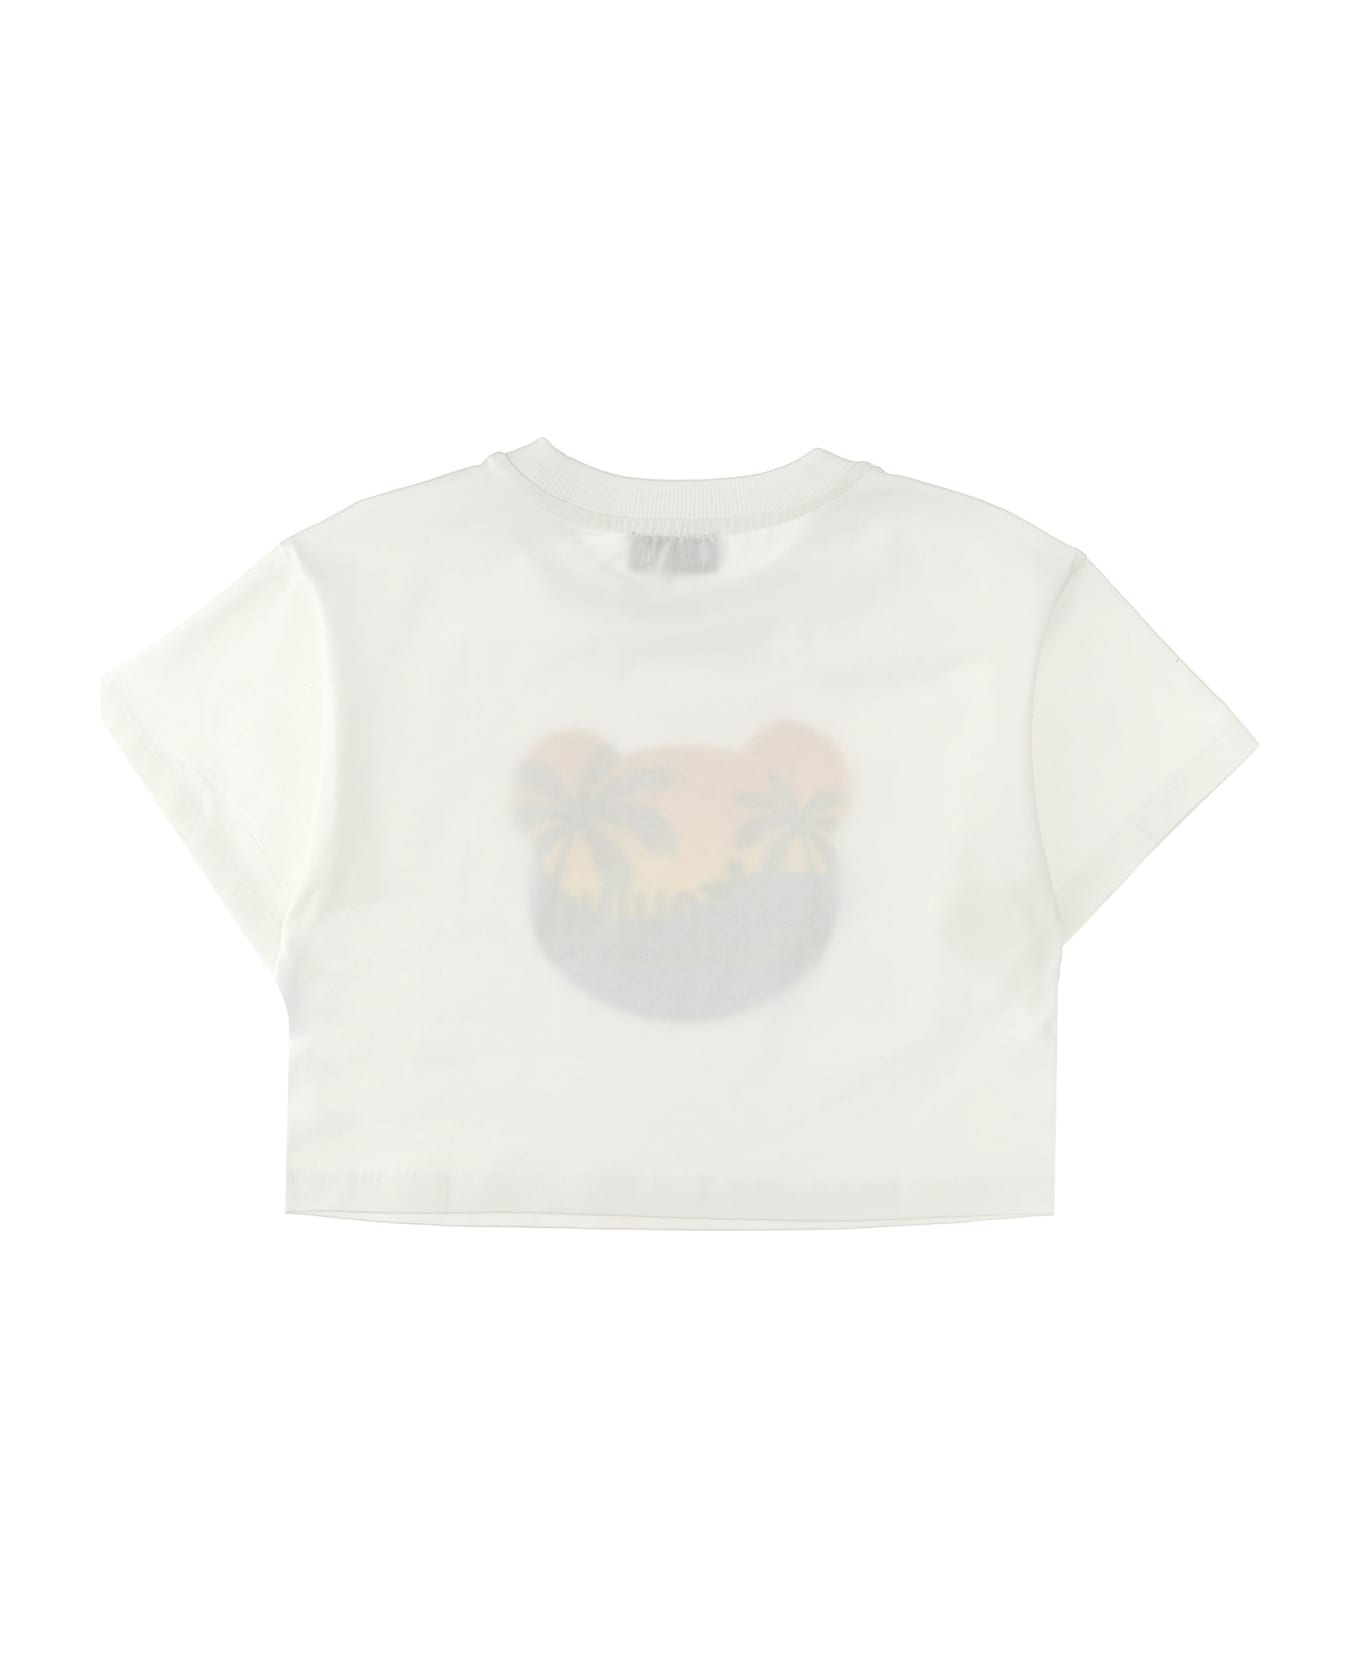 Moschino Logo Print Cropped T-shirt - White